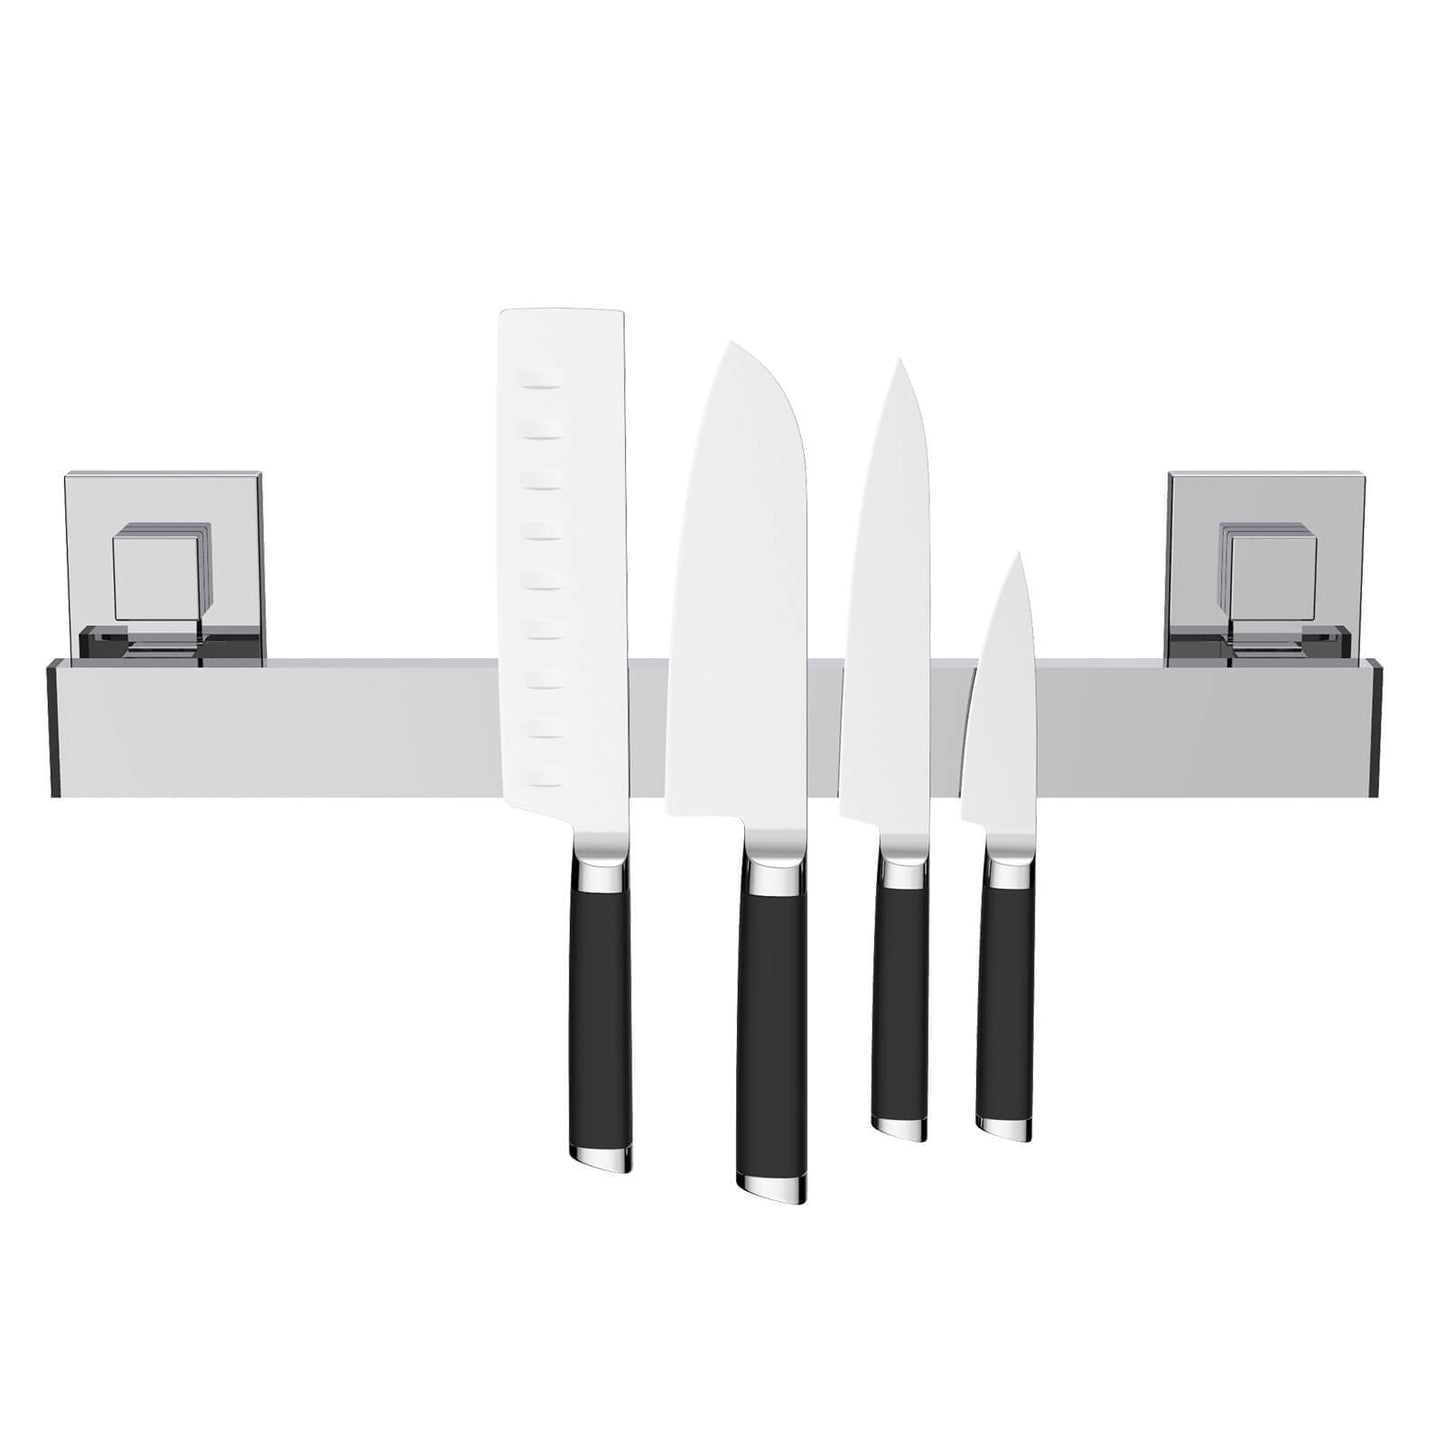 EvoVac Suction Chrome Kitchen Magnetic Knife Rail